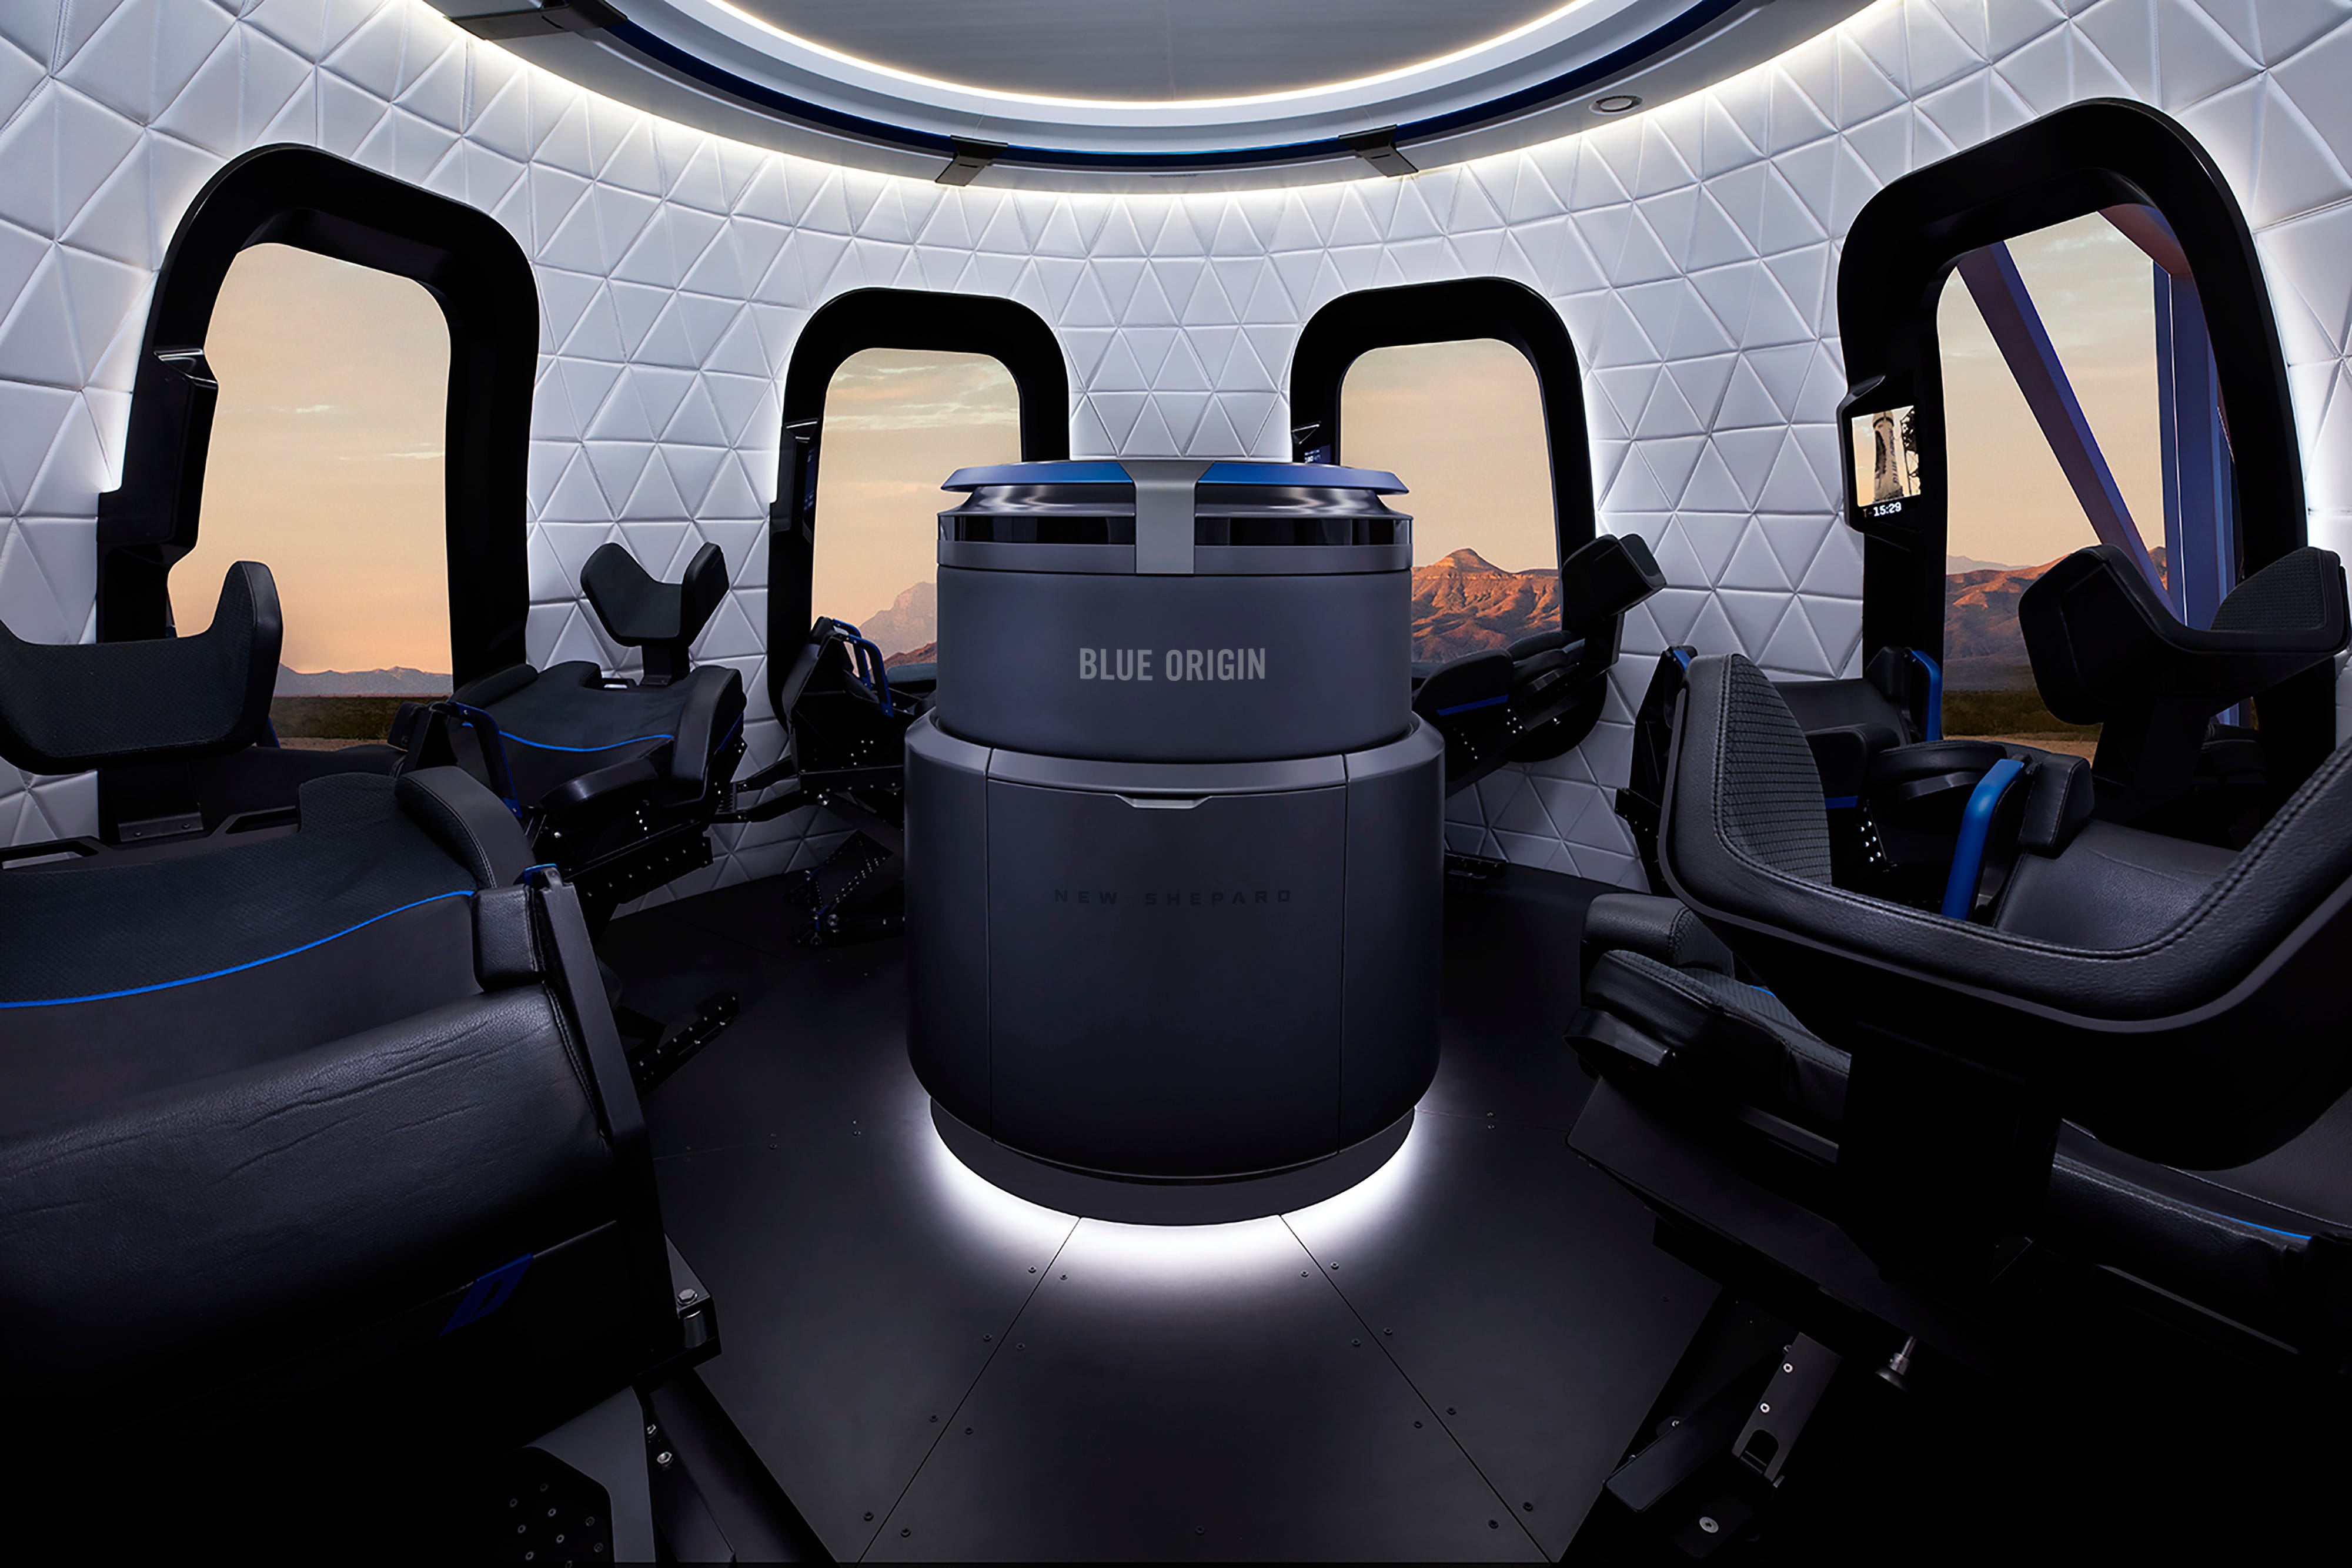 Take a tour of Blue Origin's New Shepard capsule